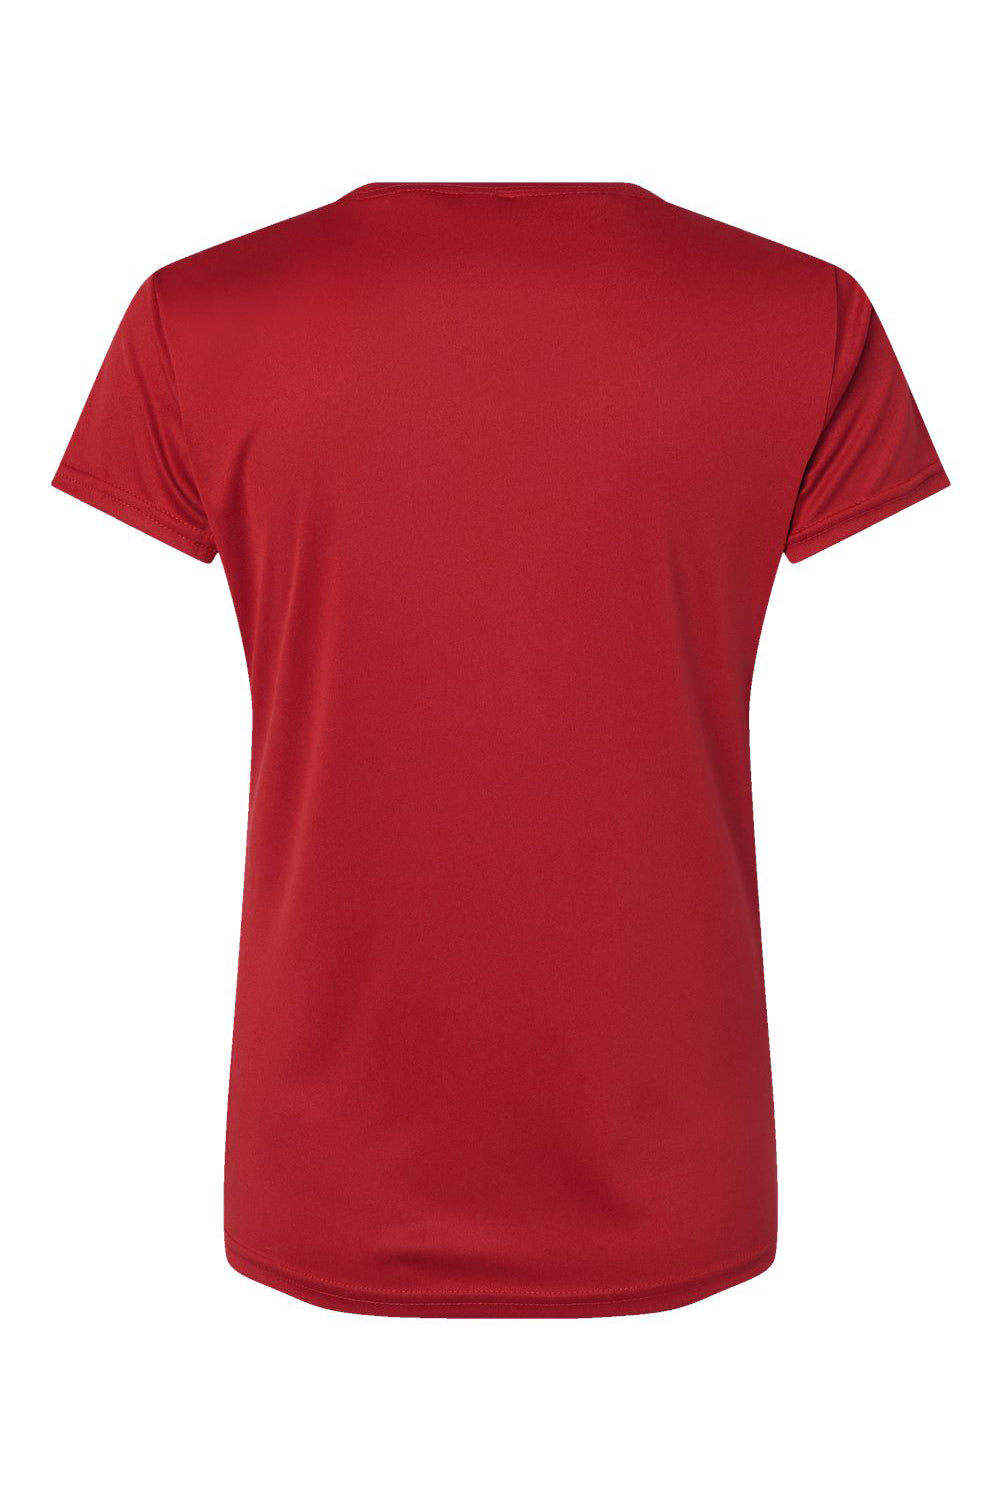 Paragon 204 Womens Islander Performance Short Sleeve Crewneck T-Shirt Red Flat Back